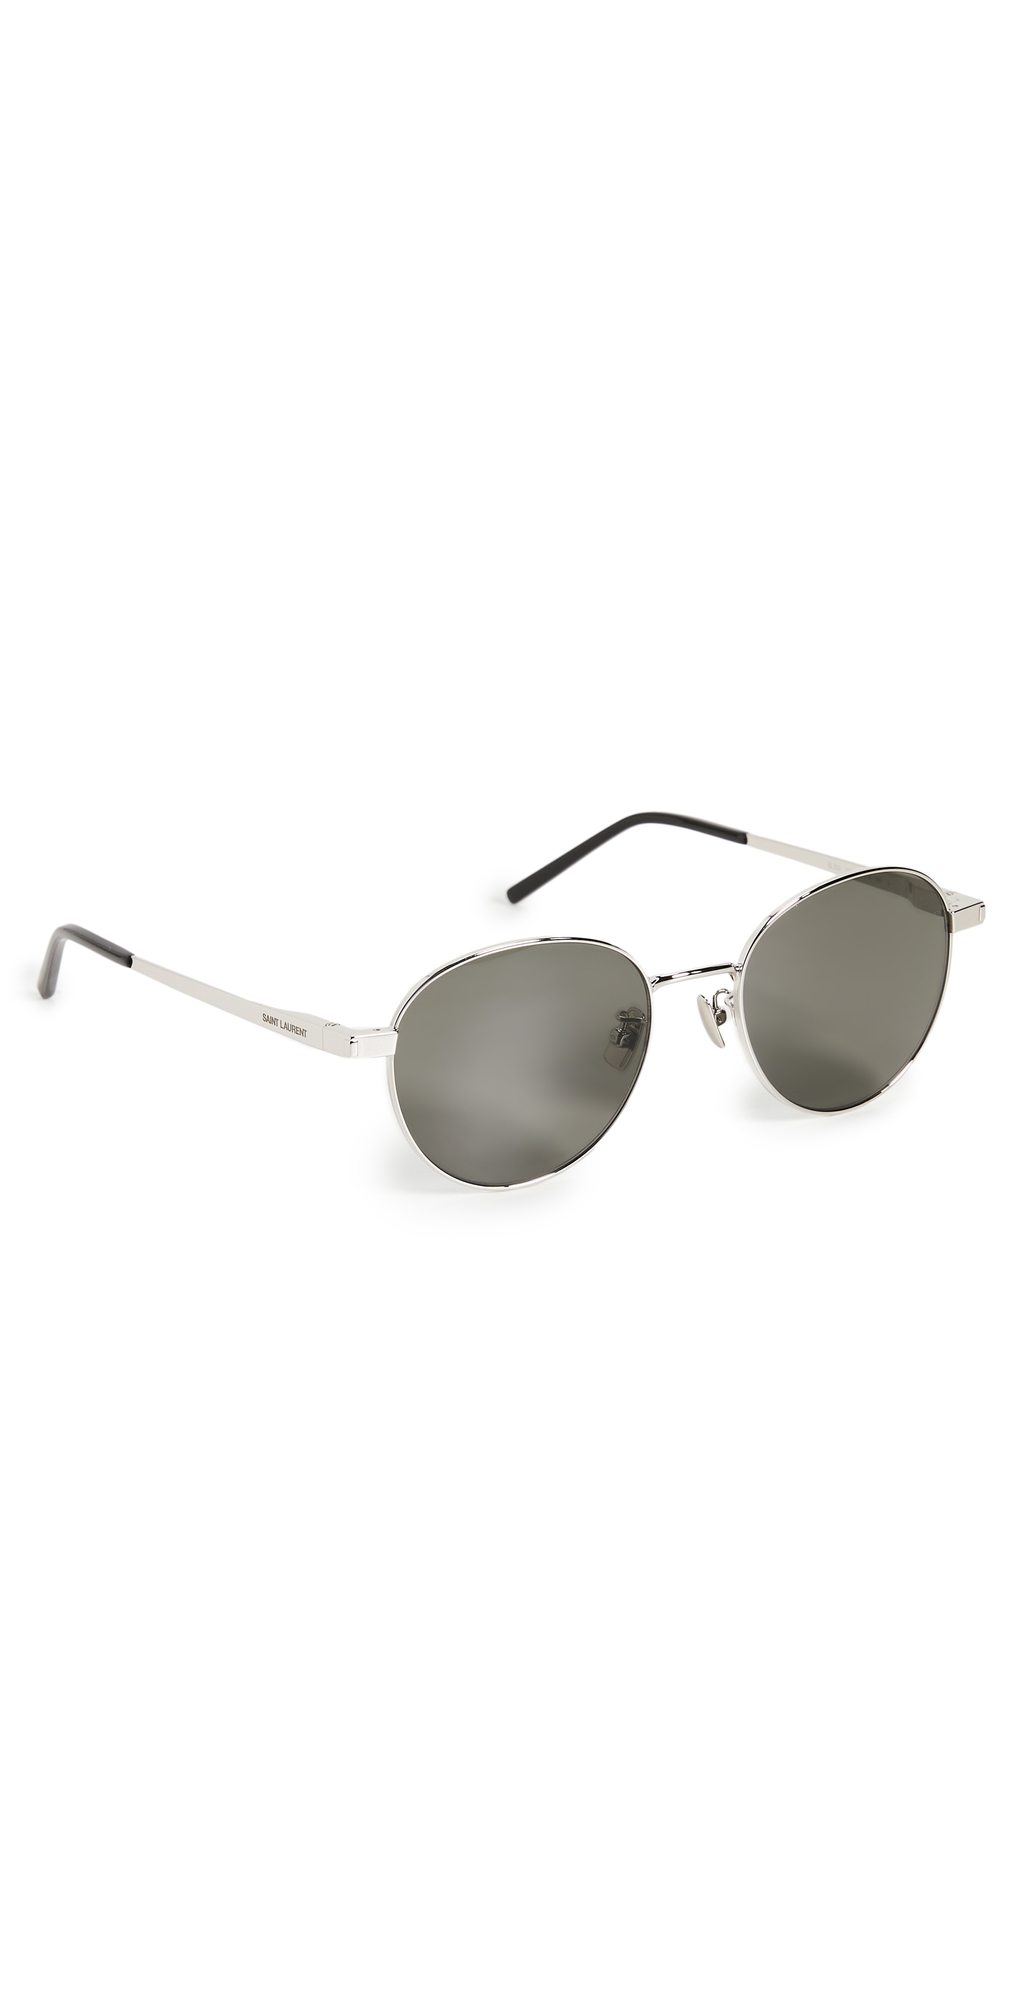 Saint Laurent SL 533 Sunglasses in silver